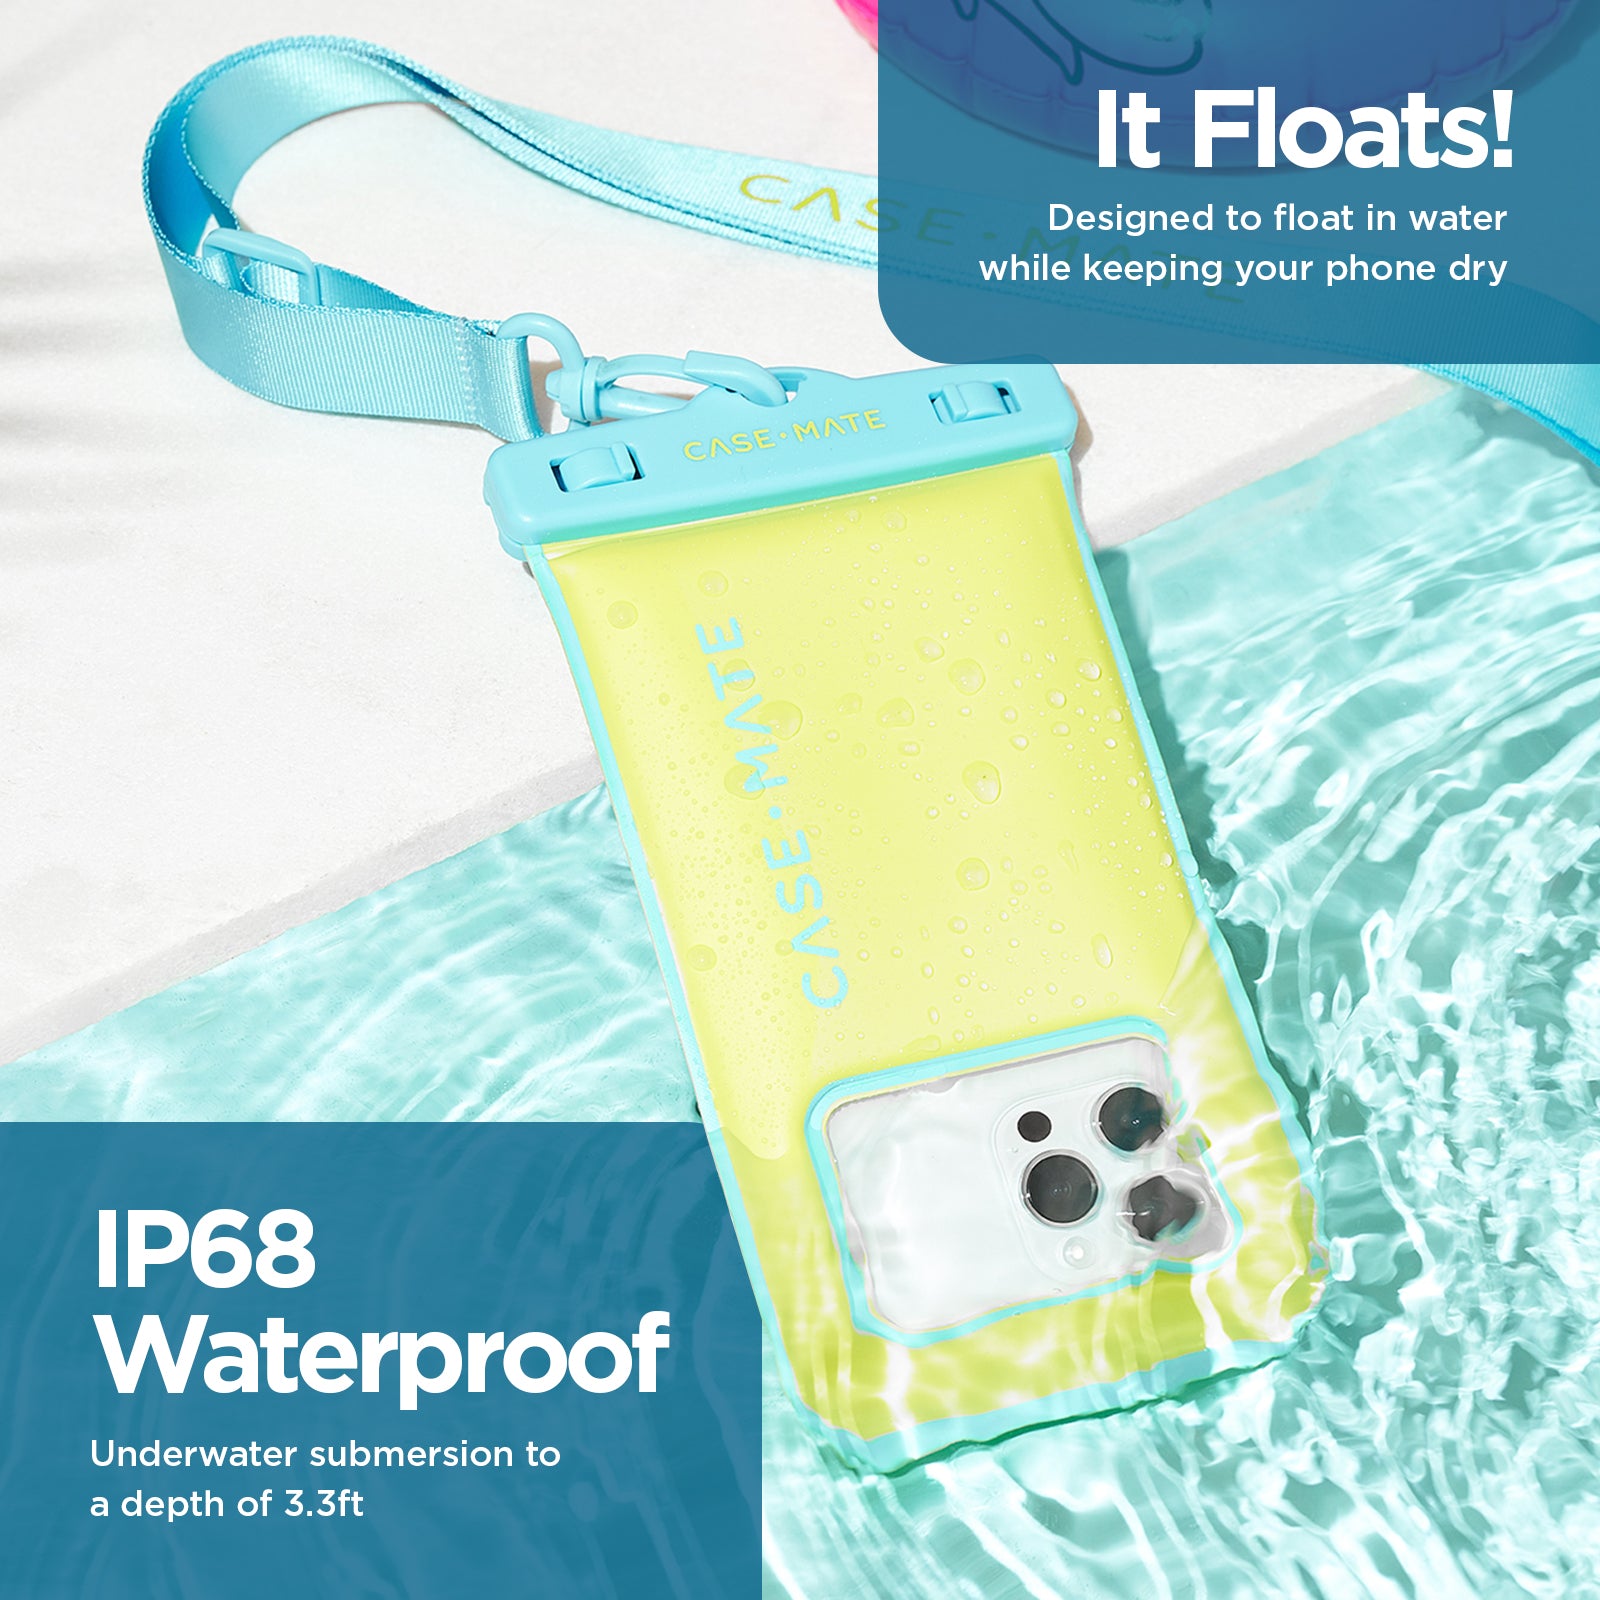 Case-Mate Waterproof Floating Pouch - 2 Pack (Citrus Splash)